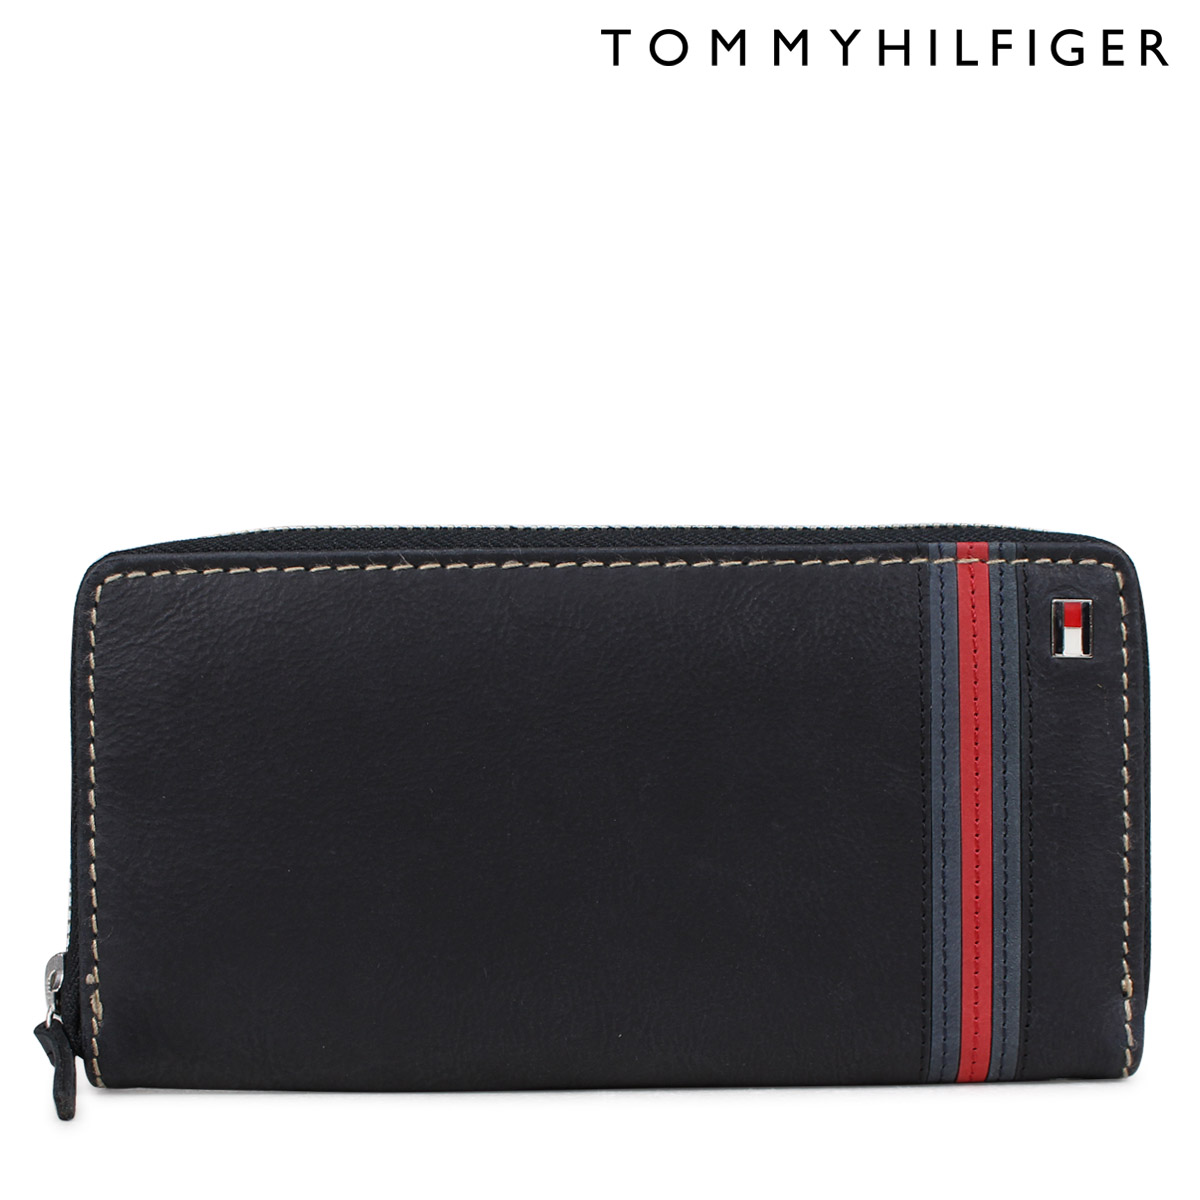 tommy hilfiger long wallet